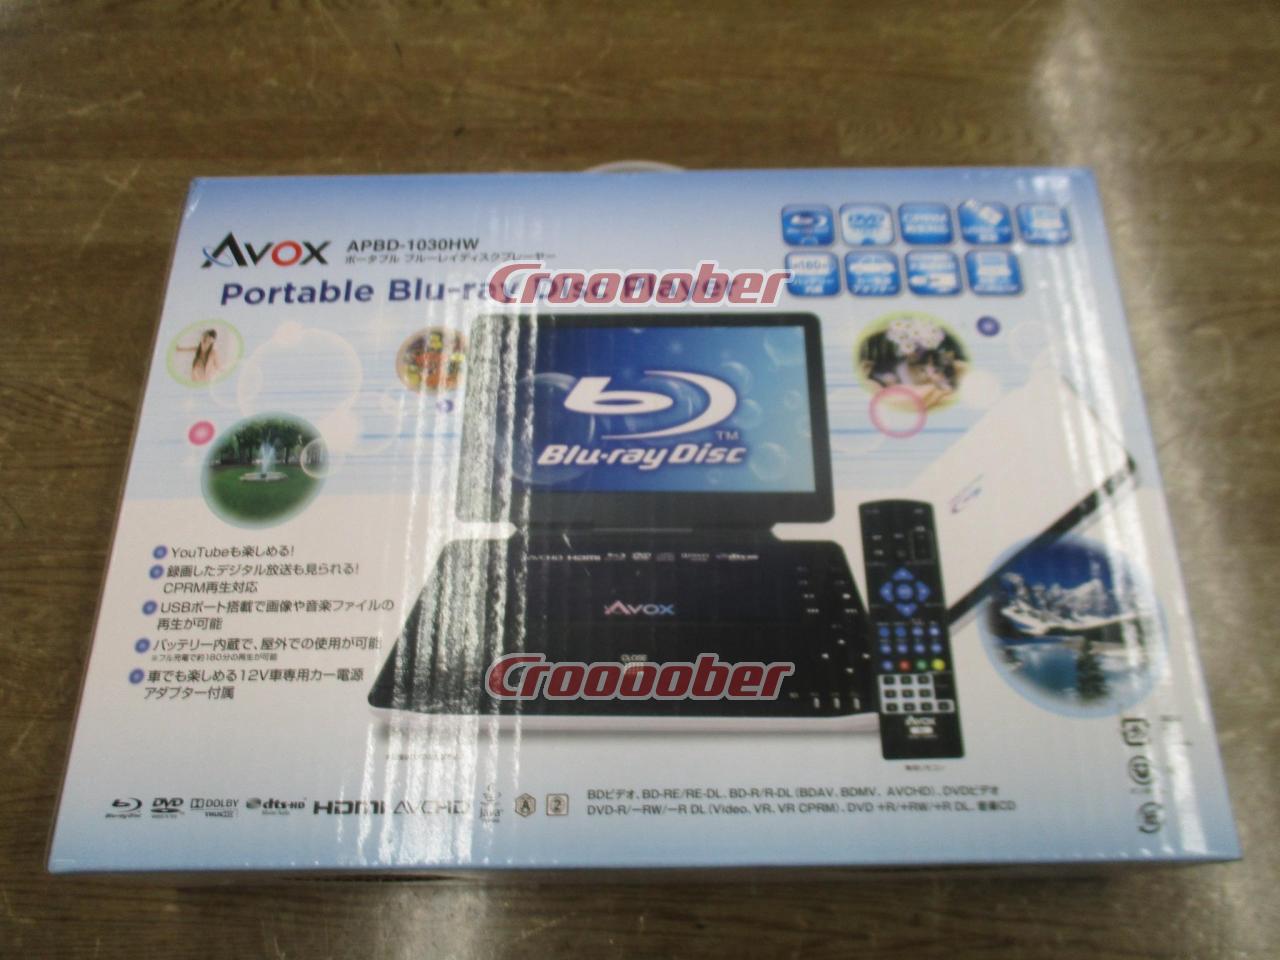 AVOX APBD-1030HW ポータブルブルーレイディスクプレーヤー | DVD 